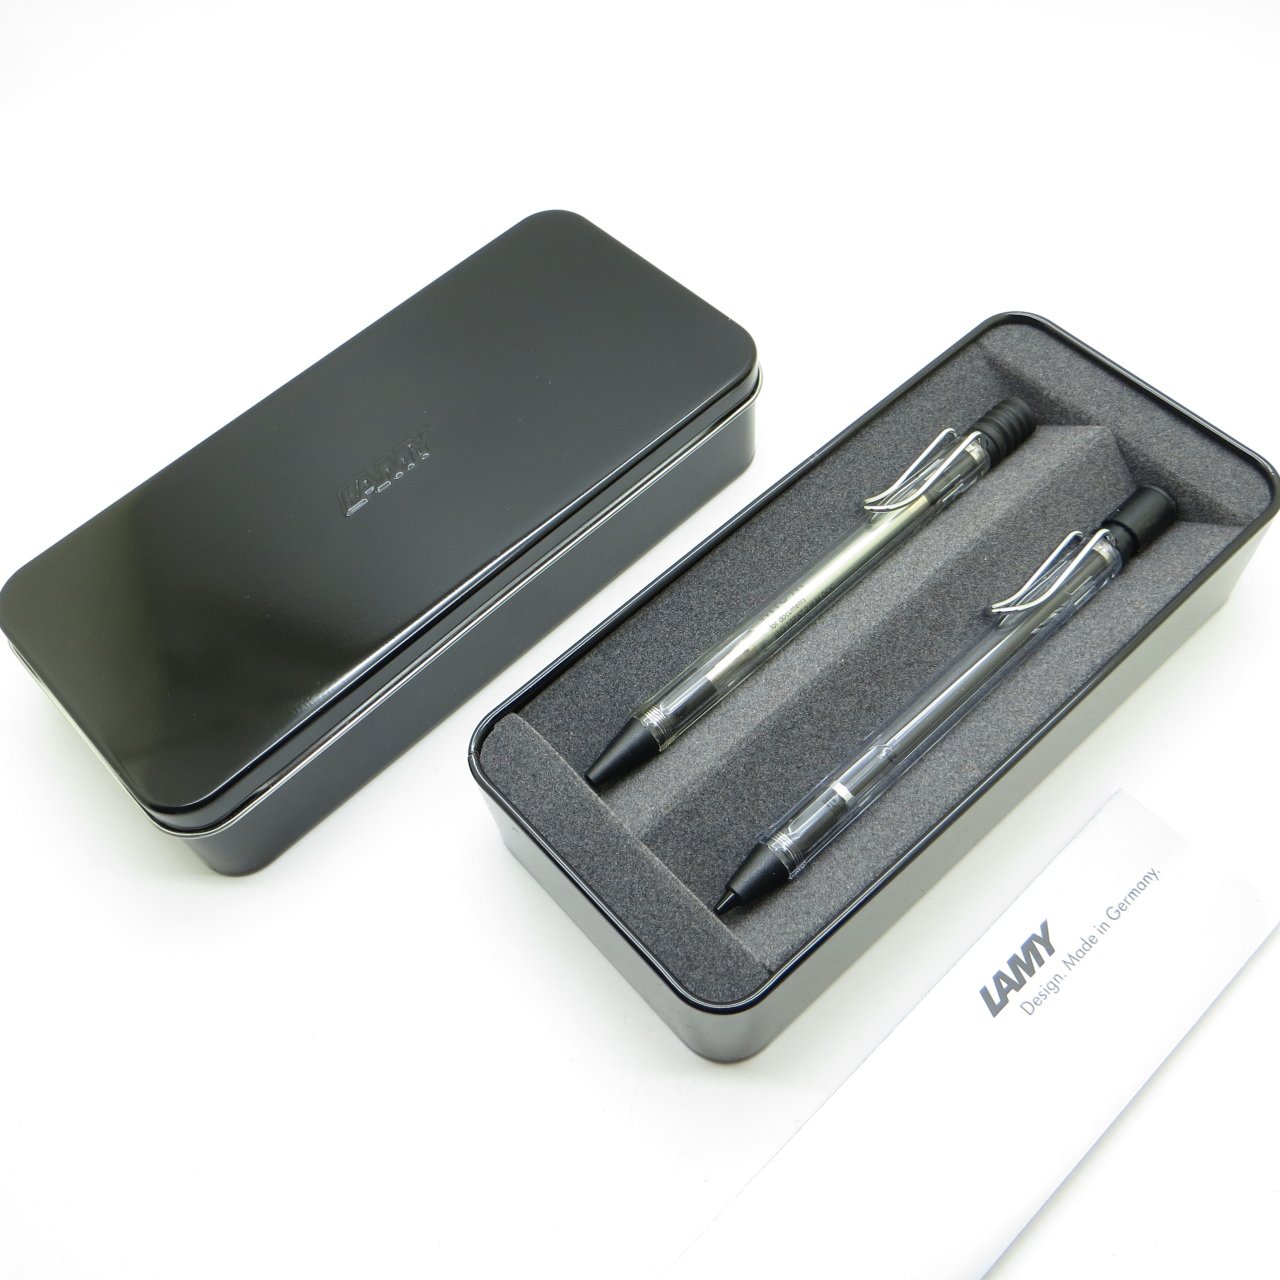 Lamy Vista Transparan Tükenmez Kalem + 0.5 Uçlu Kalem Seti + Metal Kutu | Lamy Kalem | Hepsi İsme Özel